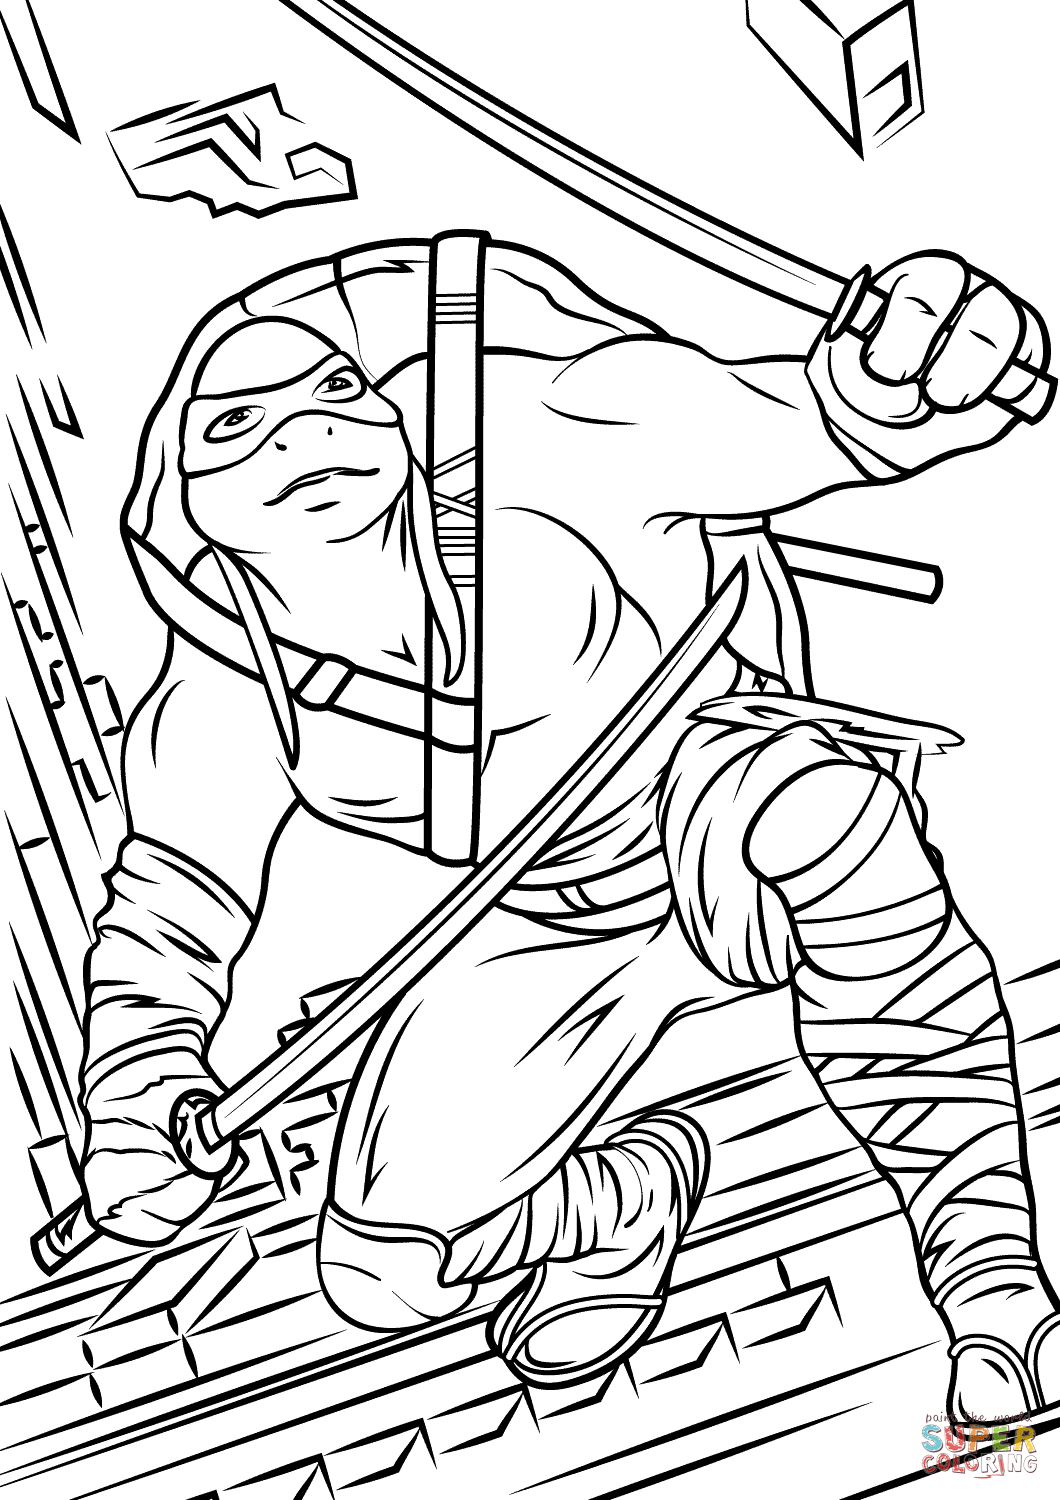 Leonardo from teenage mutant ninja turtles coloring page free printable coloring pages